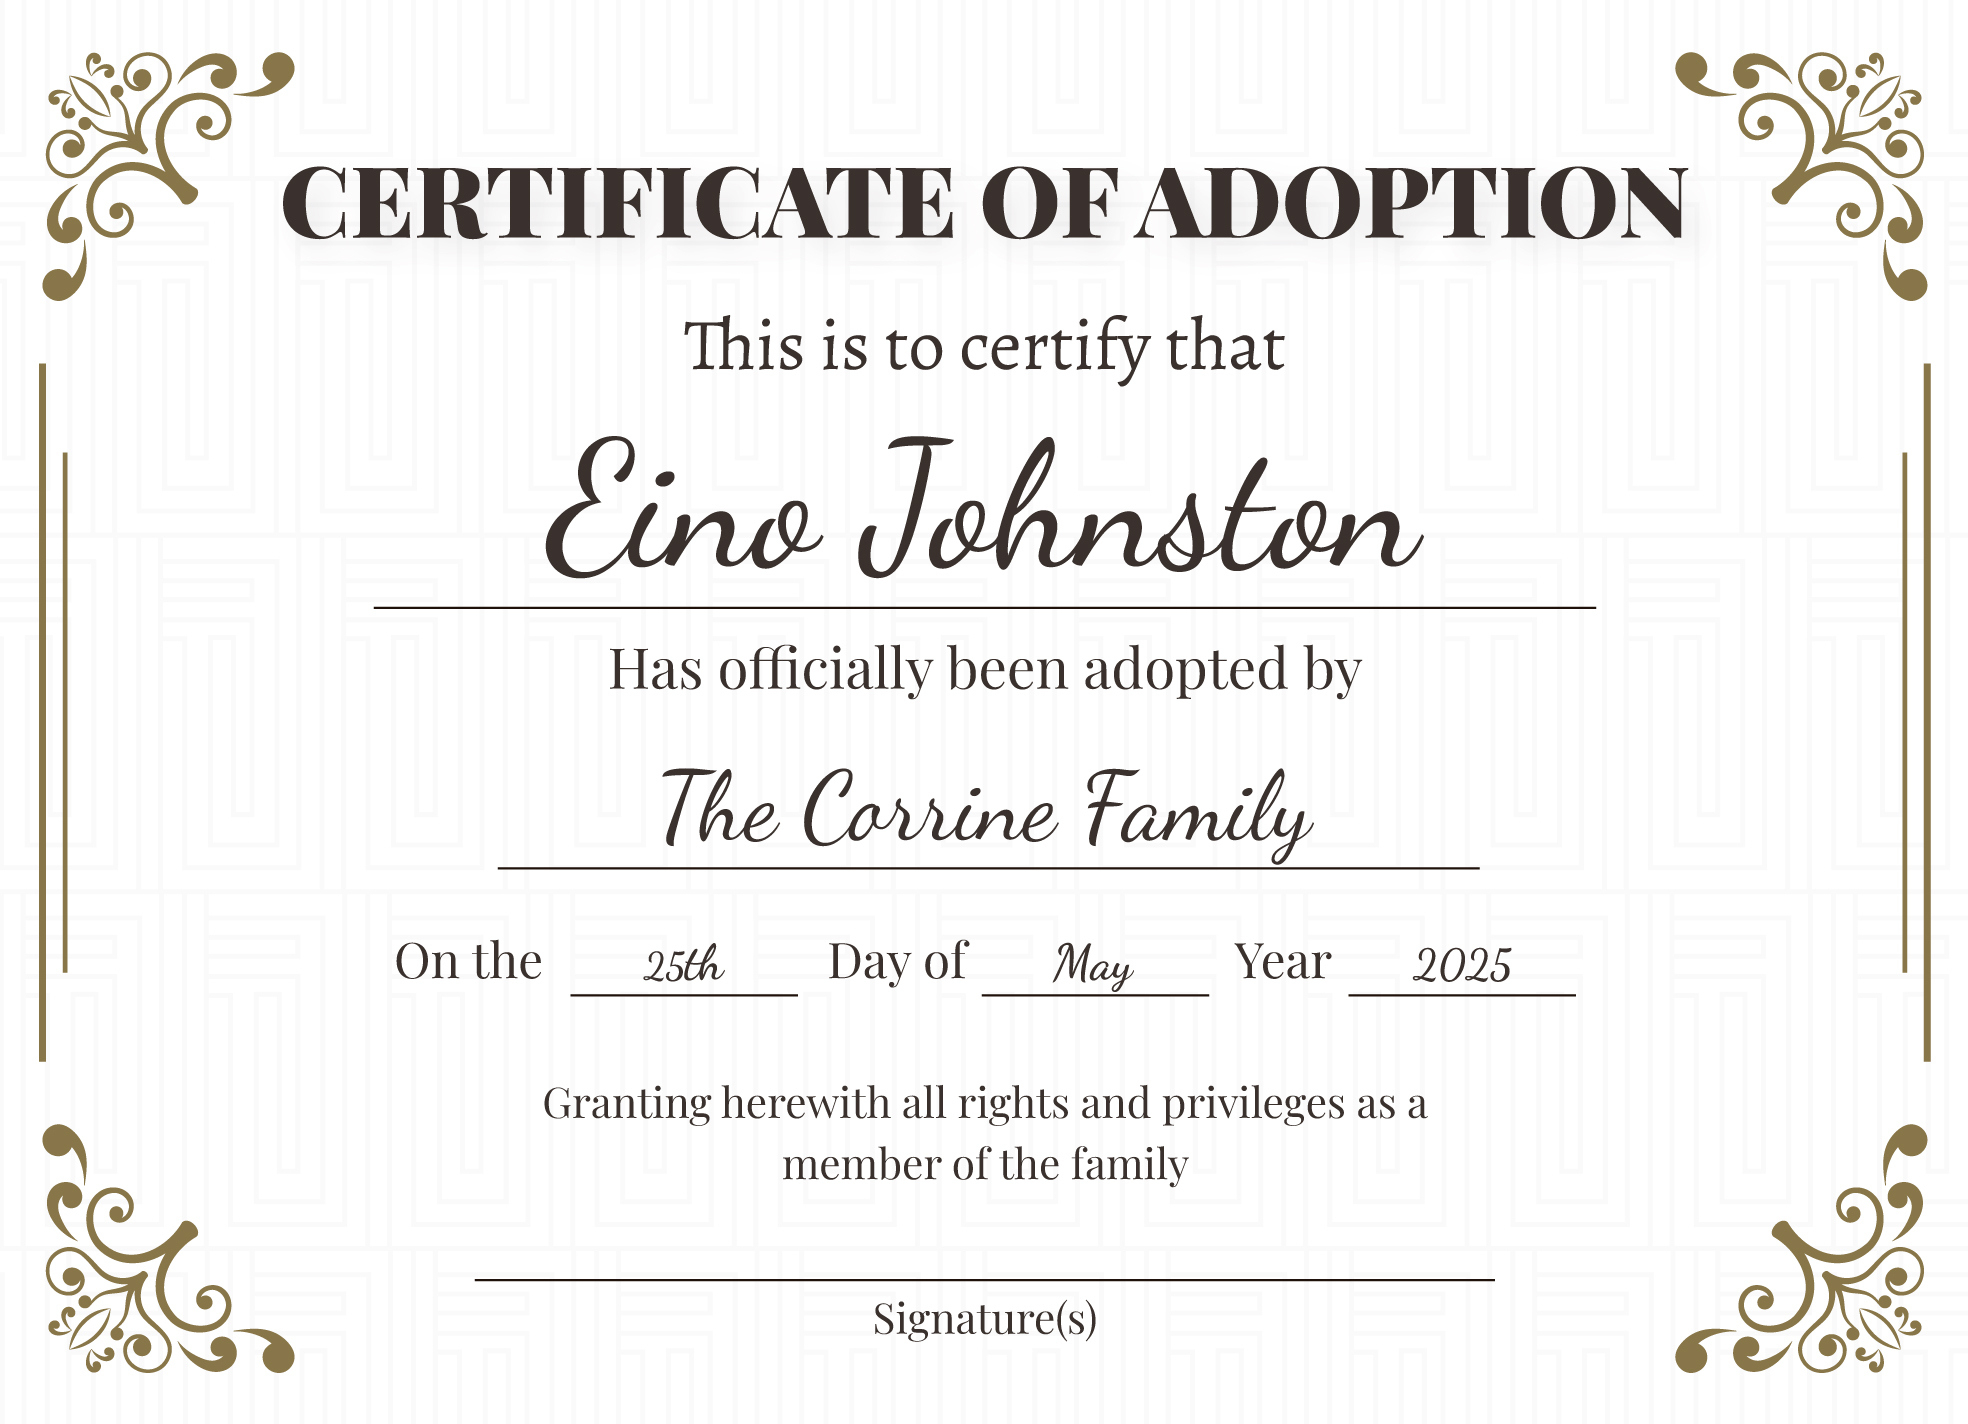 Adoption Certificate Free Google Docs Template - Gdoc.io within Fake Adoption Certificate Free Printable